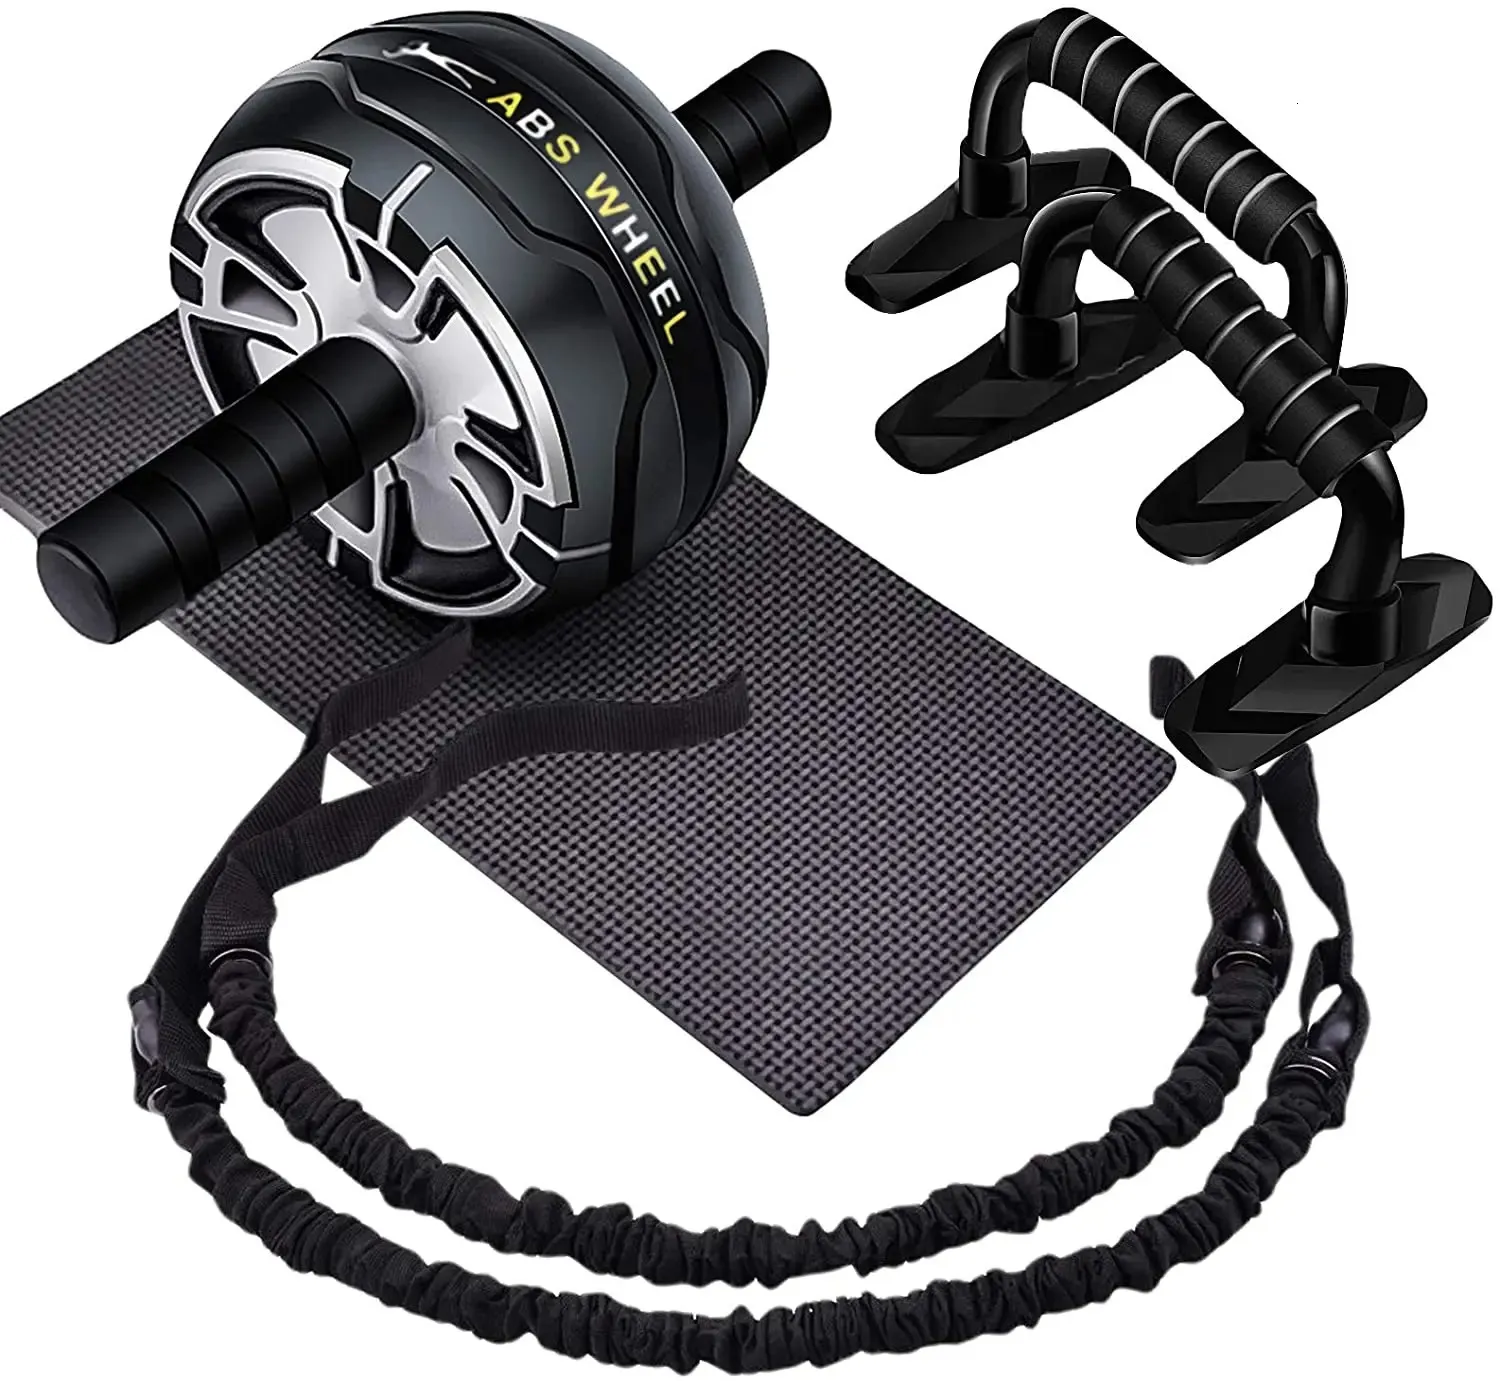 AB Rollers 4in1 Rollerhjul med push -up staples Resistance Bands and Kne Pad Fitness Hem Gym Gym Träningsutrustning 231104